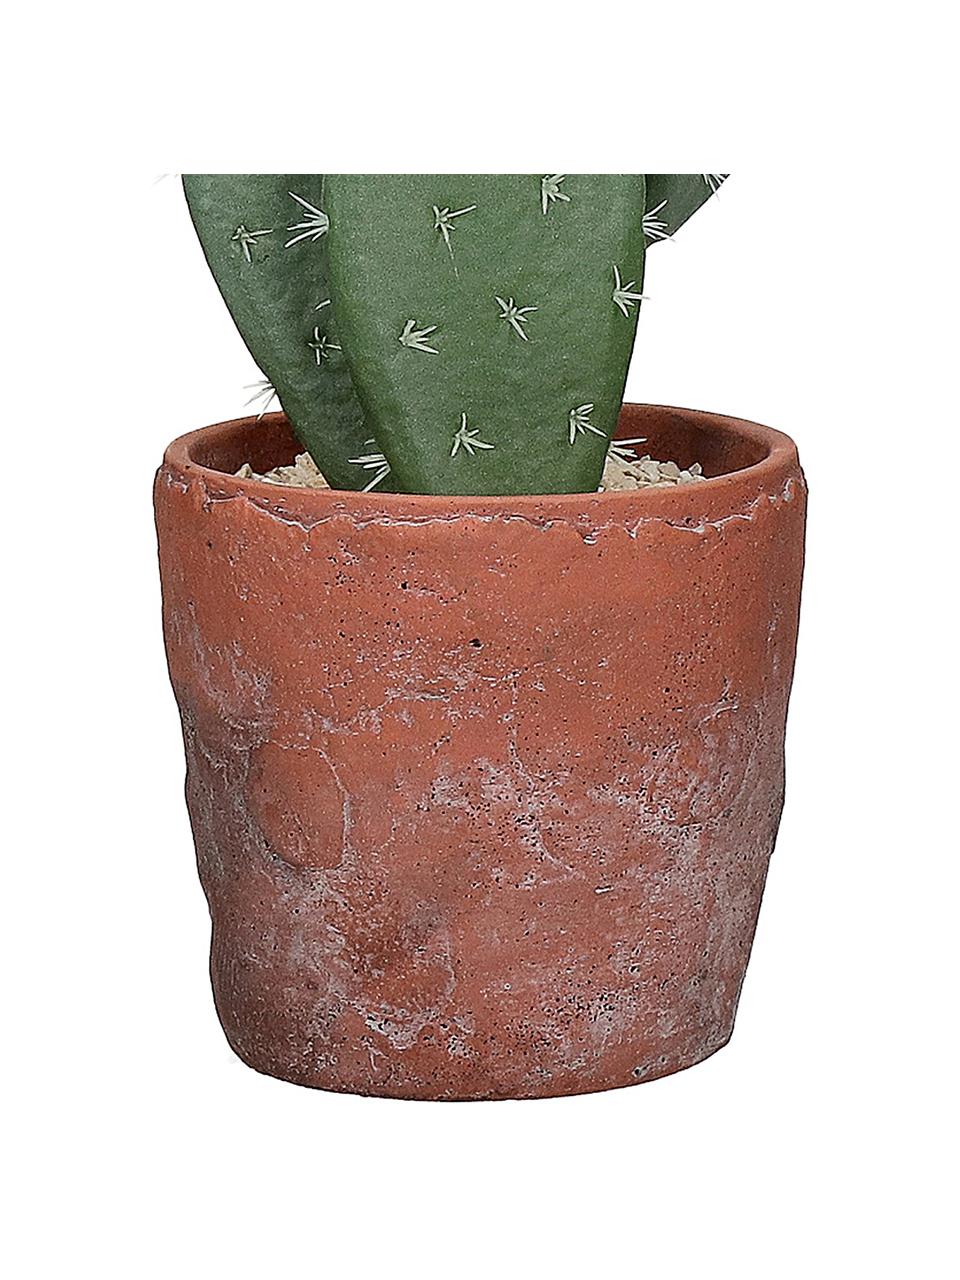 Cactus artificiel en cache-pot Terracotta, Vert, terracotta, Ø 13 x haut. 46 cm